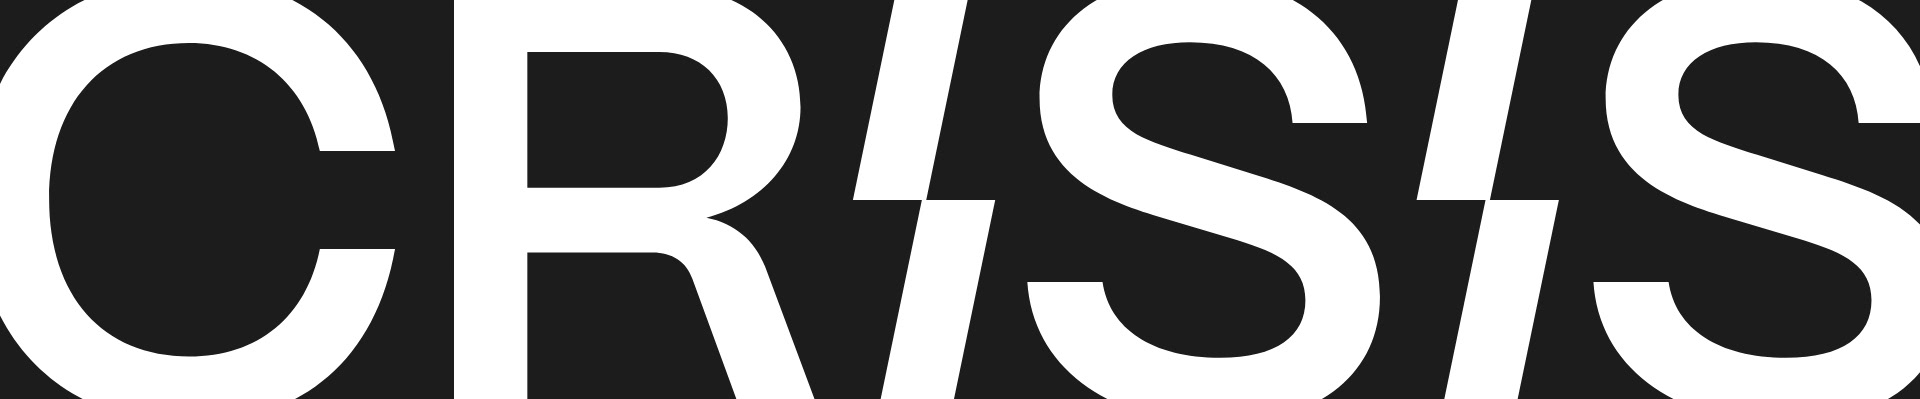 Crisis Design Studio のプロファイルバナー